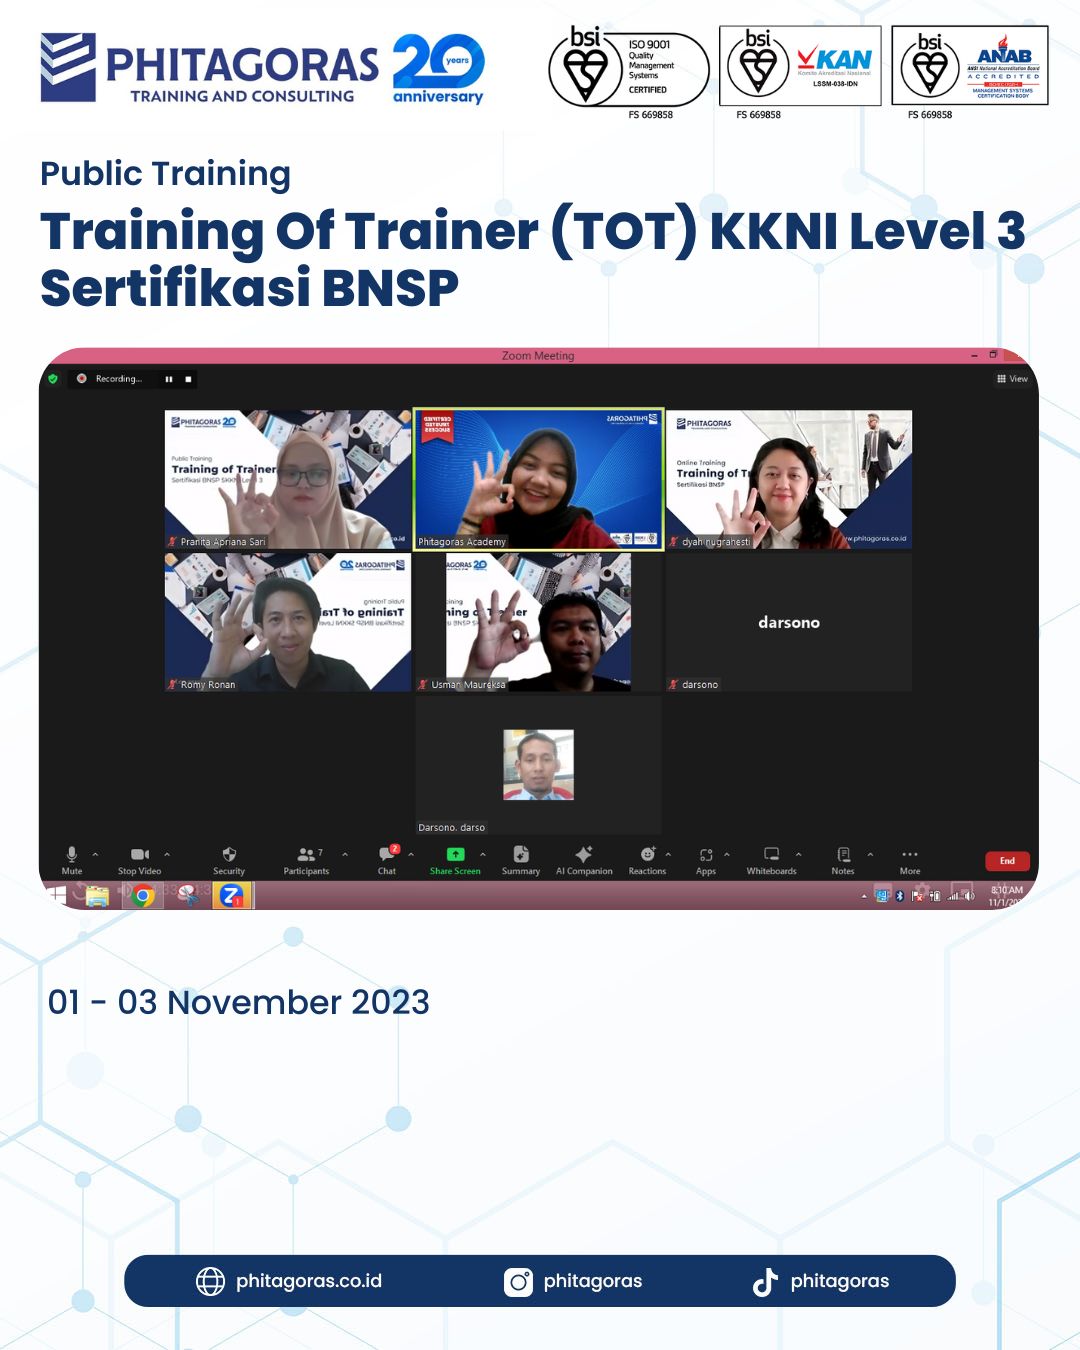 Public Training Of Trainer (TOT) KKNI Level 3 Sertifikasi BNSP